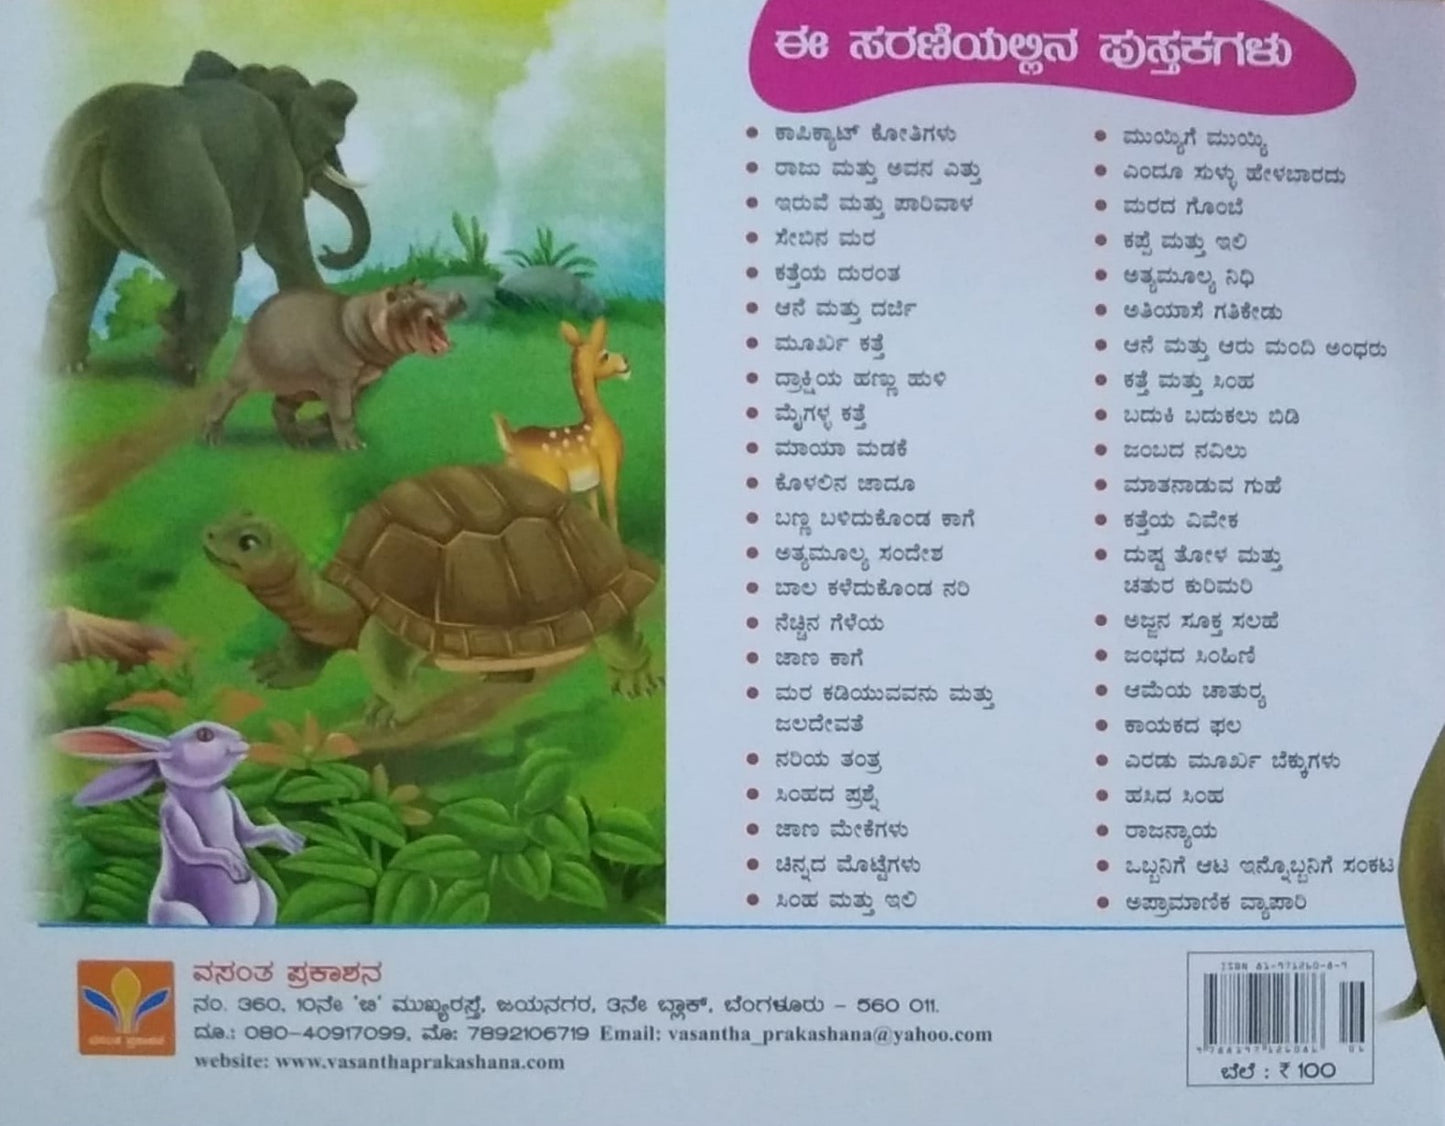 Ameya Charurya is a book of Children's Stories, Edited by S. Pattabhirama, Published by Vasantha Prakashana